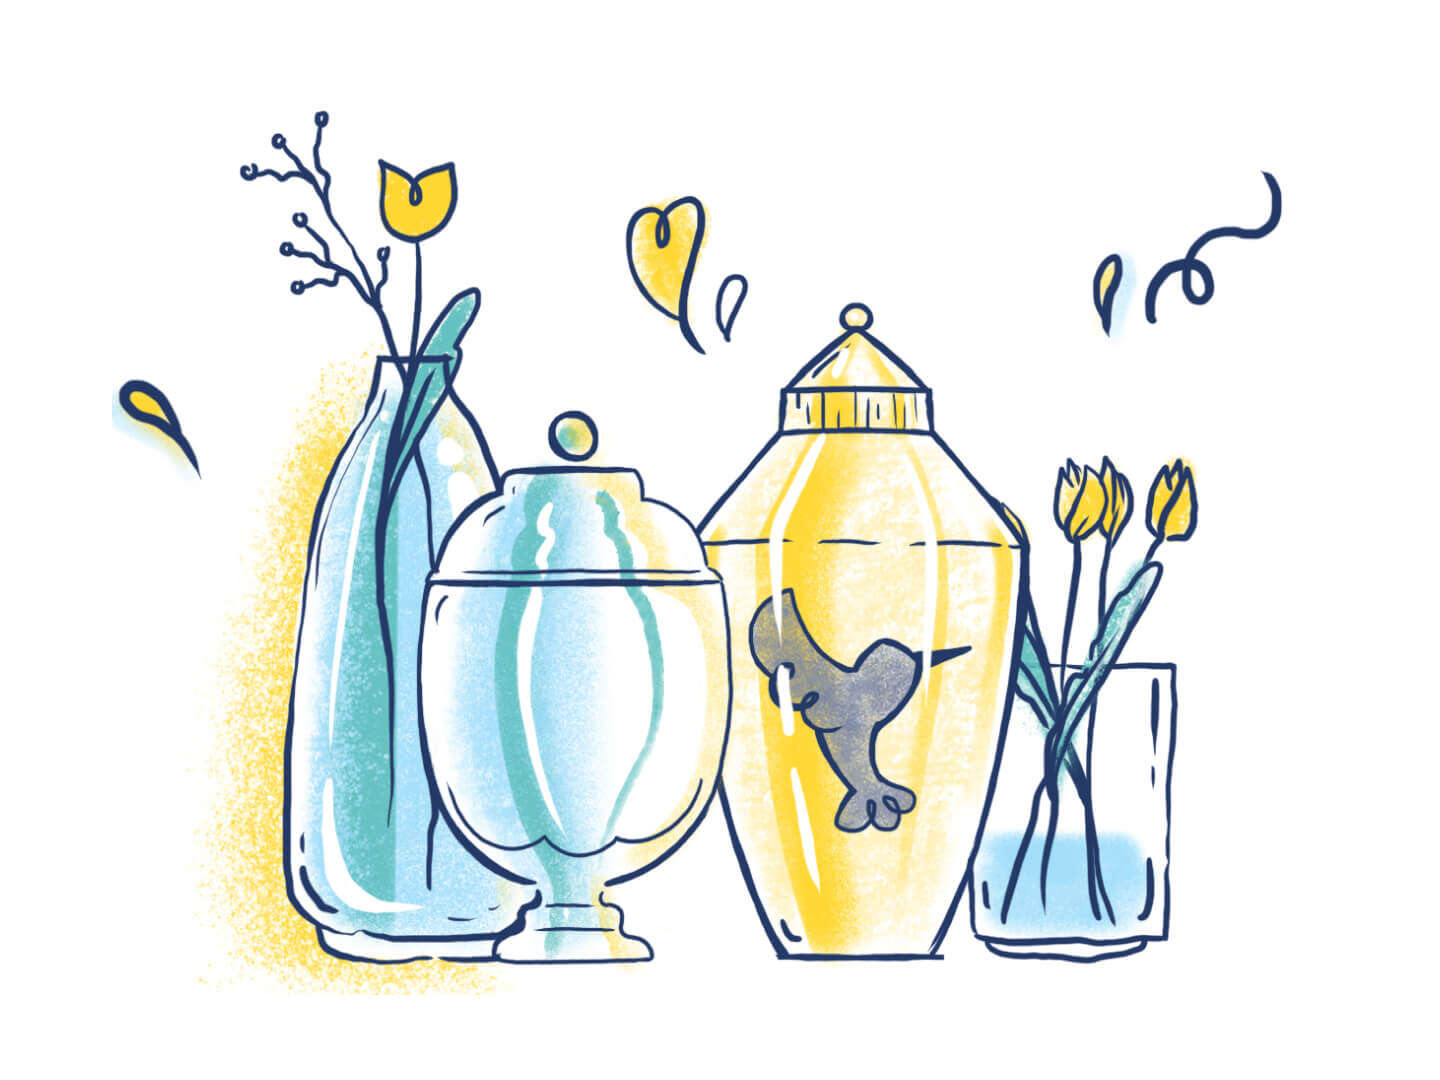 tulip urn vases illustration